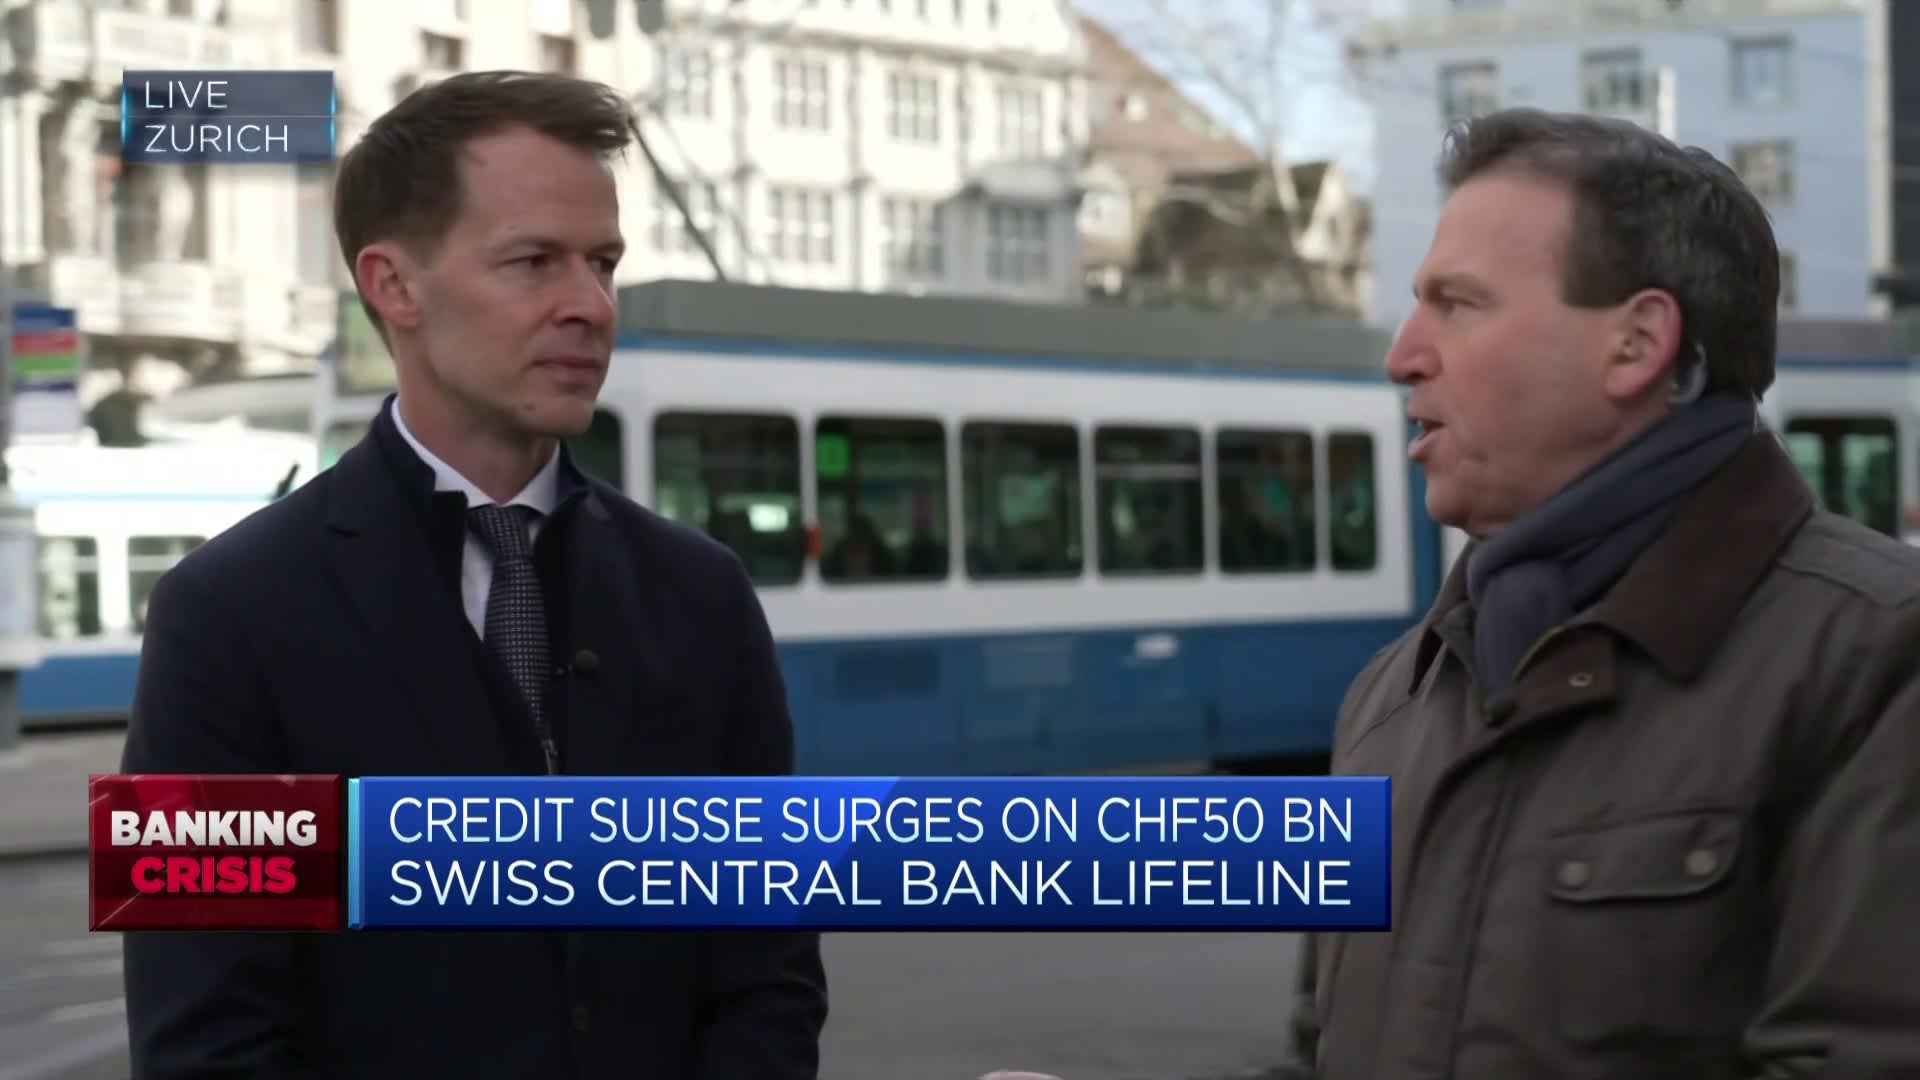 Assuring depositors key to Credit Suisse survival, says CIO